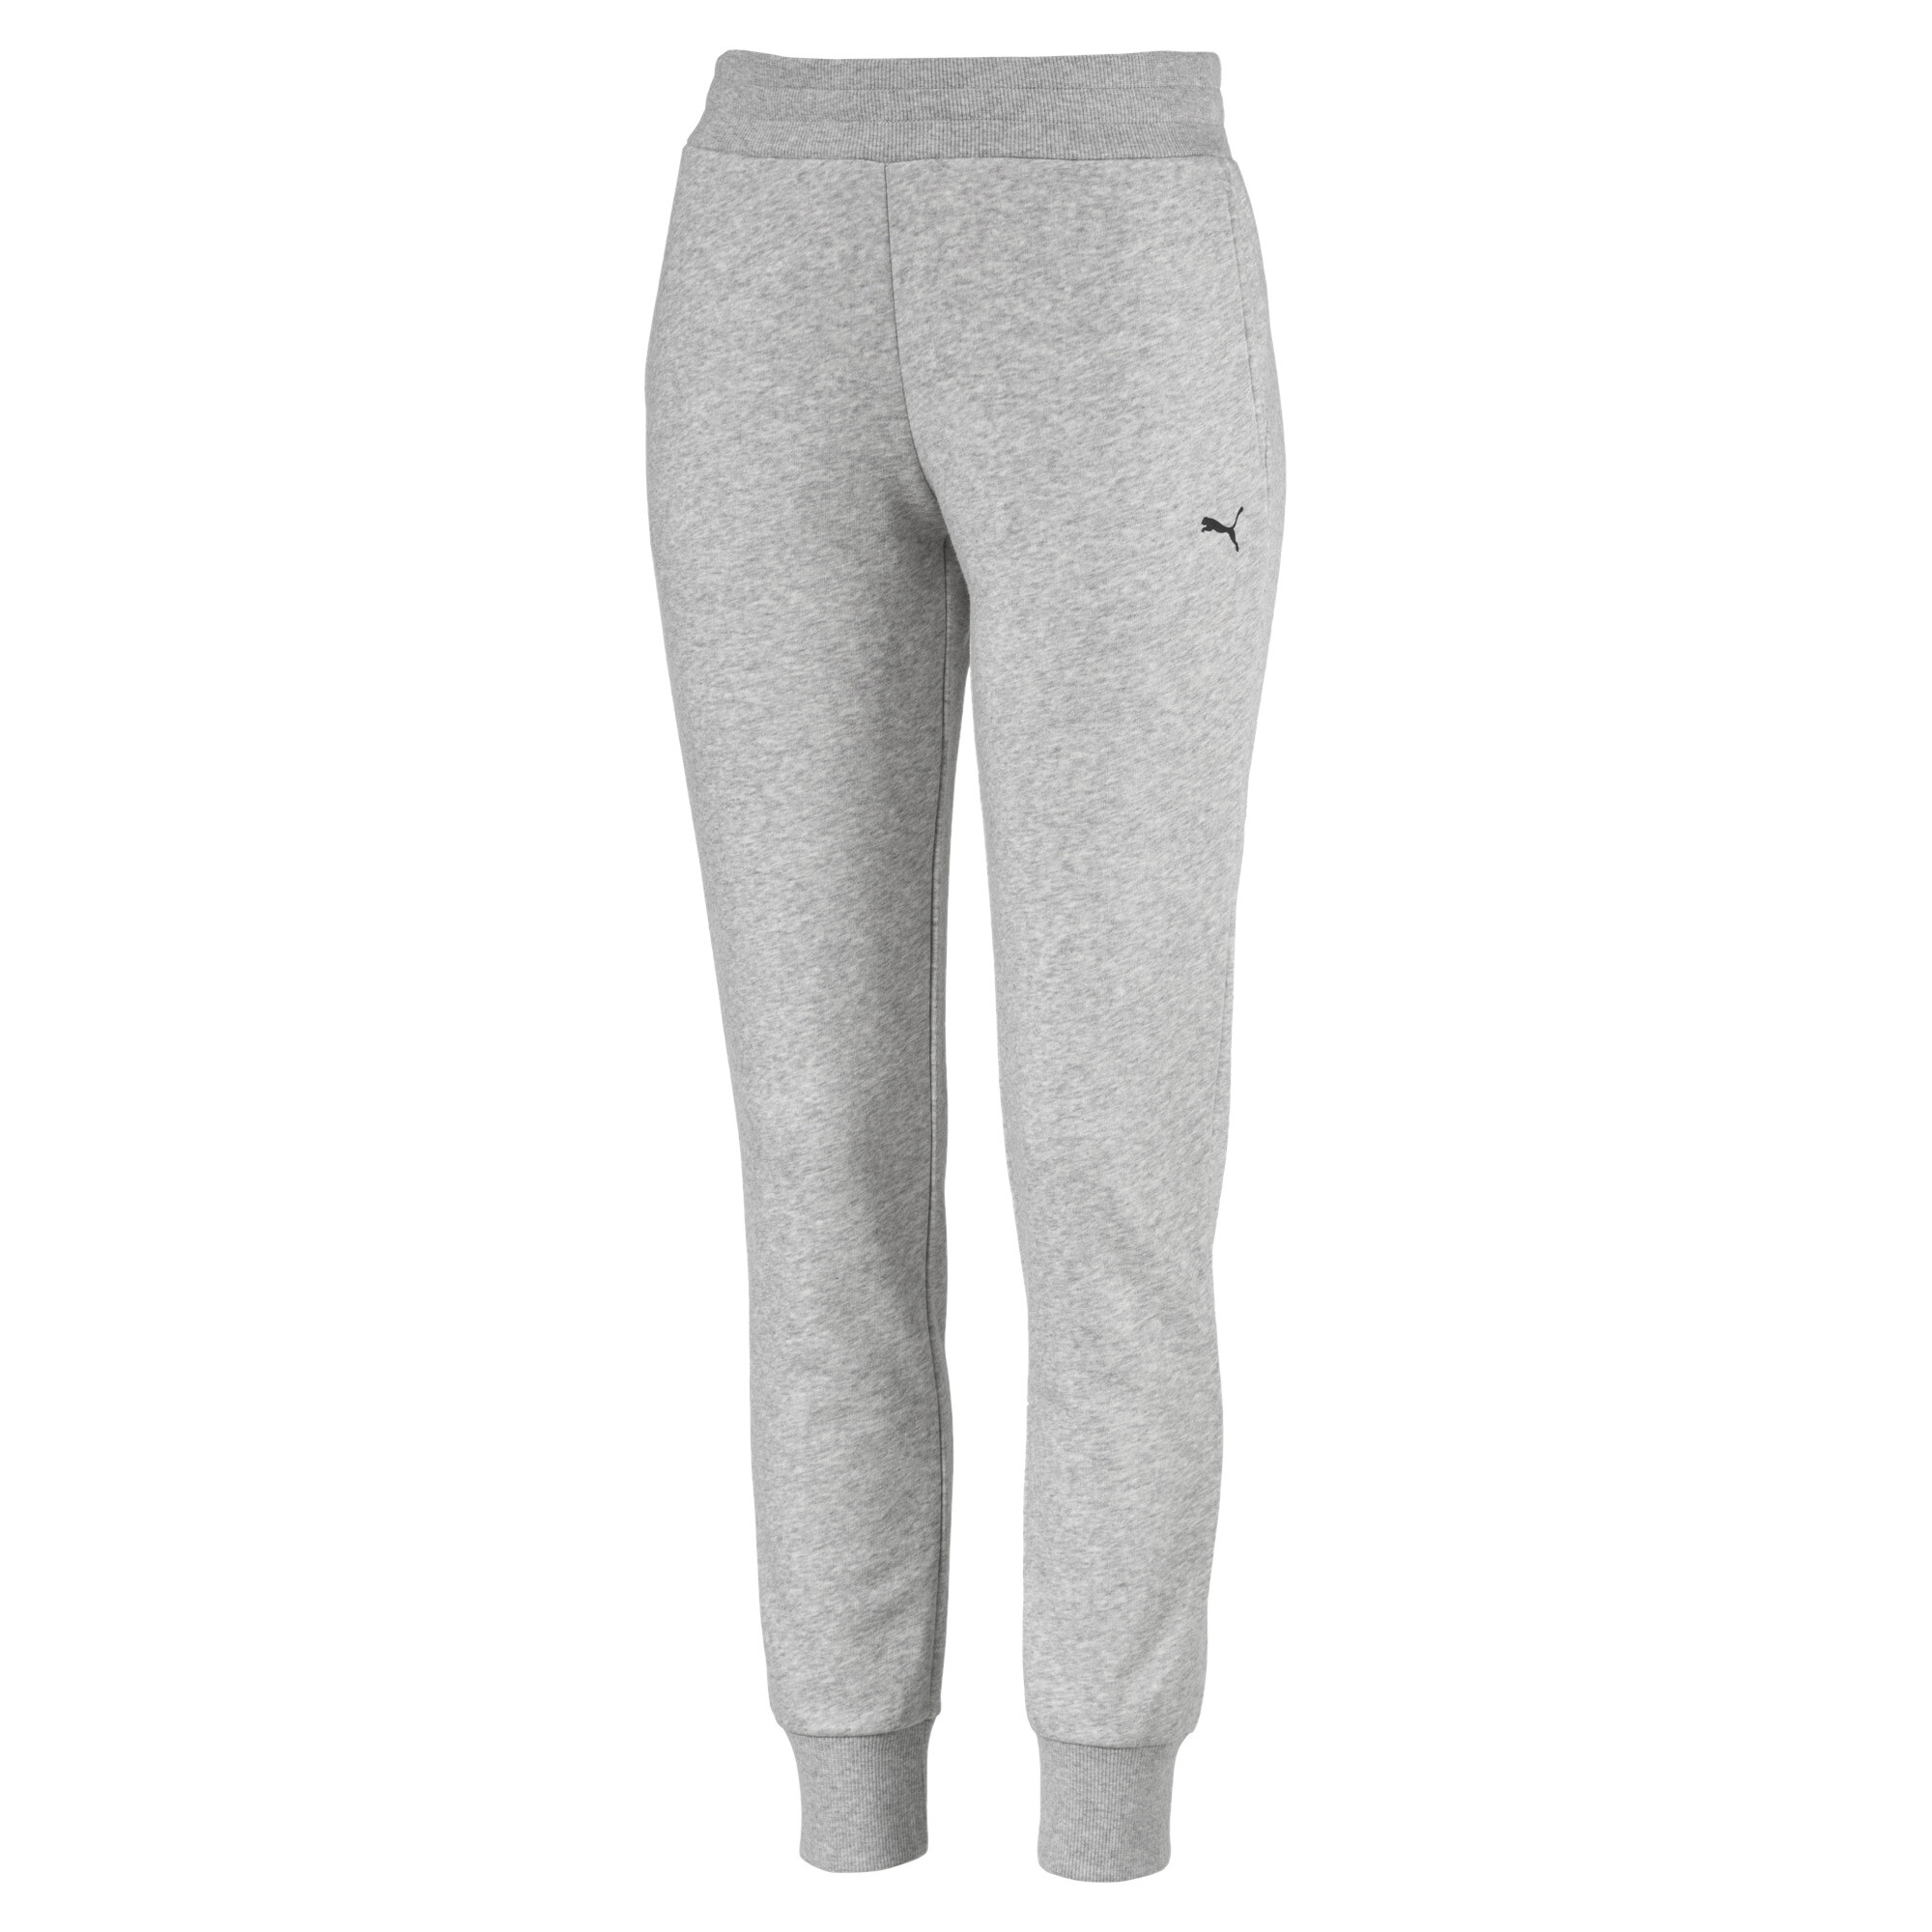 puma joggers womens grey